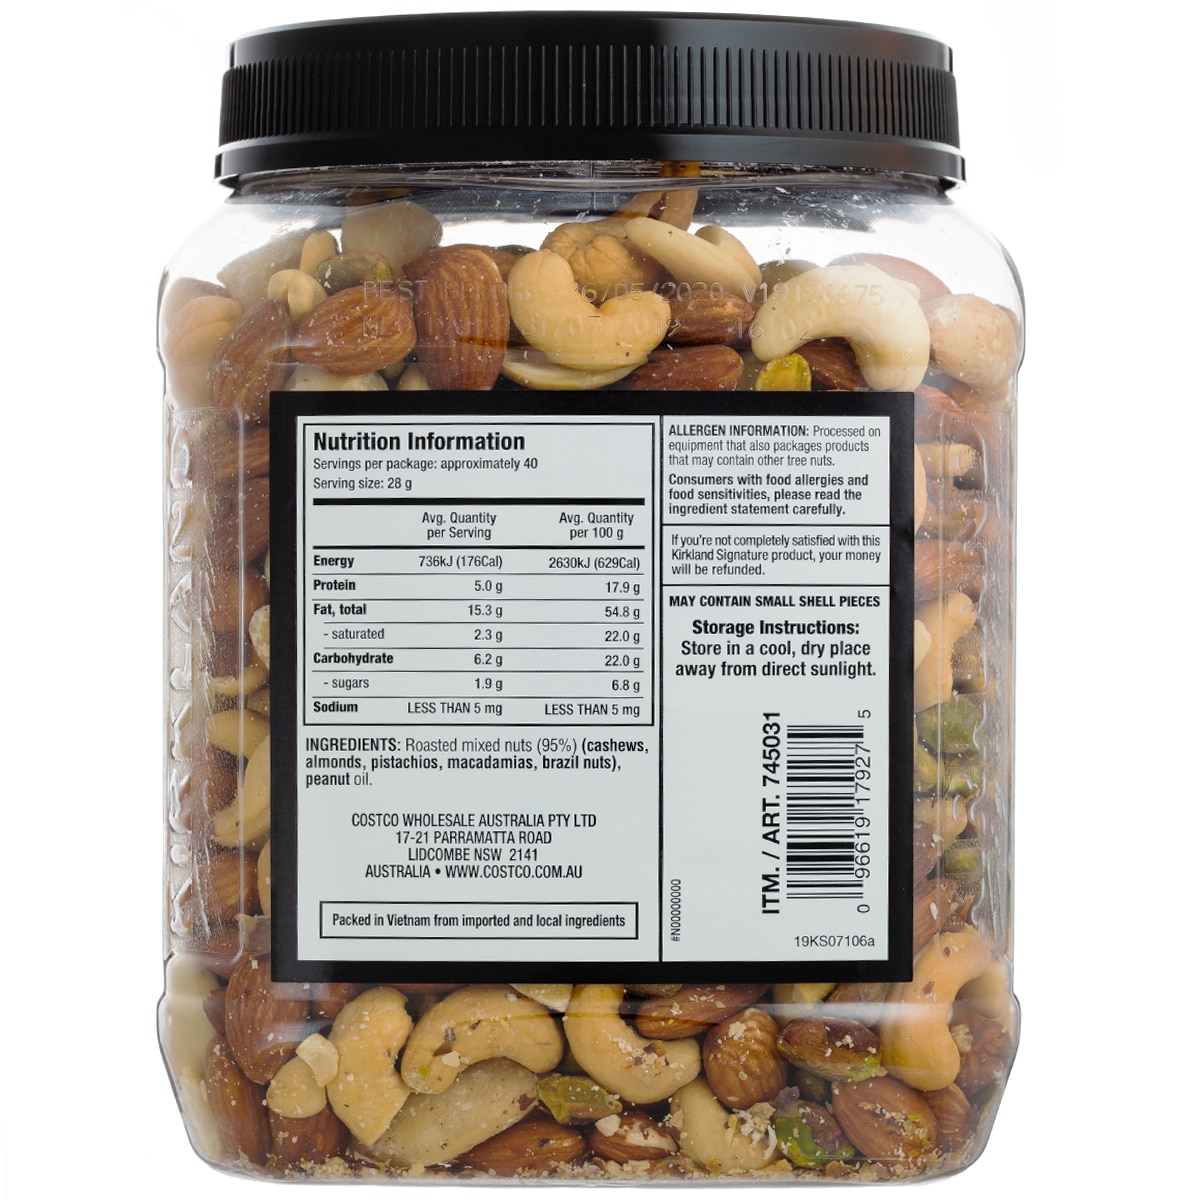 Kirkland Signature Unsalted Mix Nuts 1.13kg